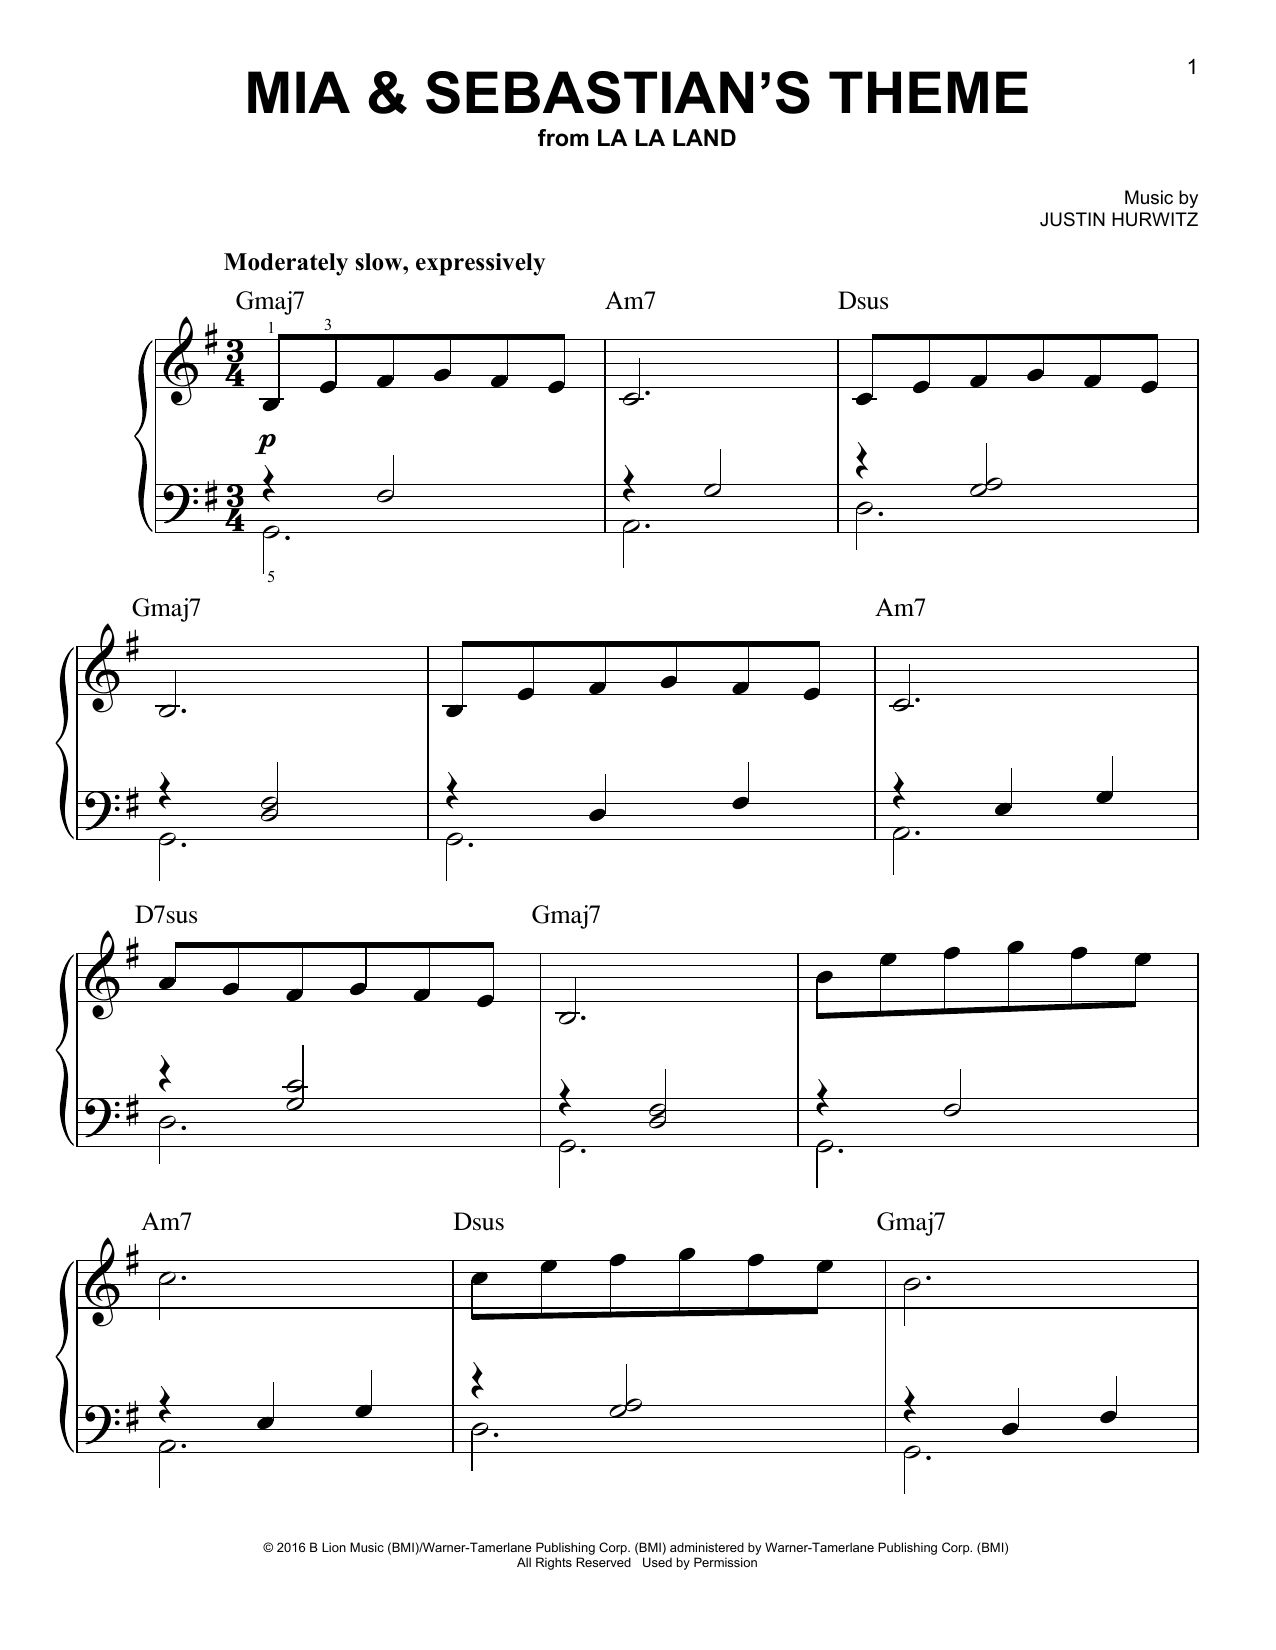 Justin Hurwitz Mia & Sebastian's Theme (from La La Land) Sheet Music Notes & Chords for Cello Solo - Download or Print PDF